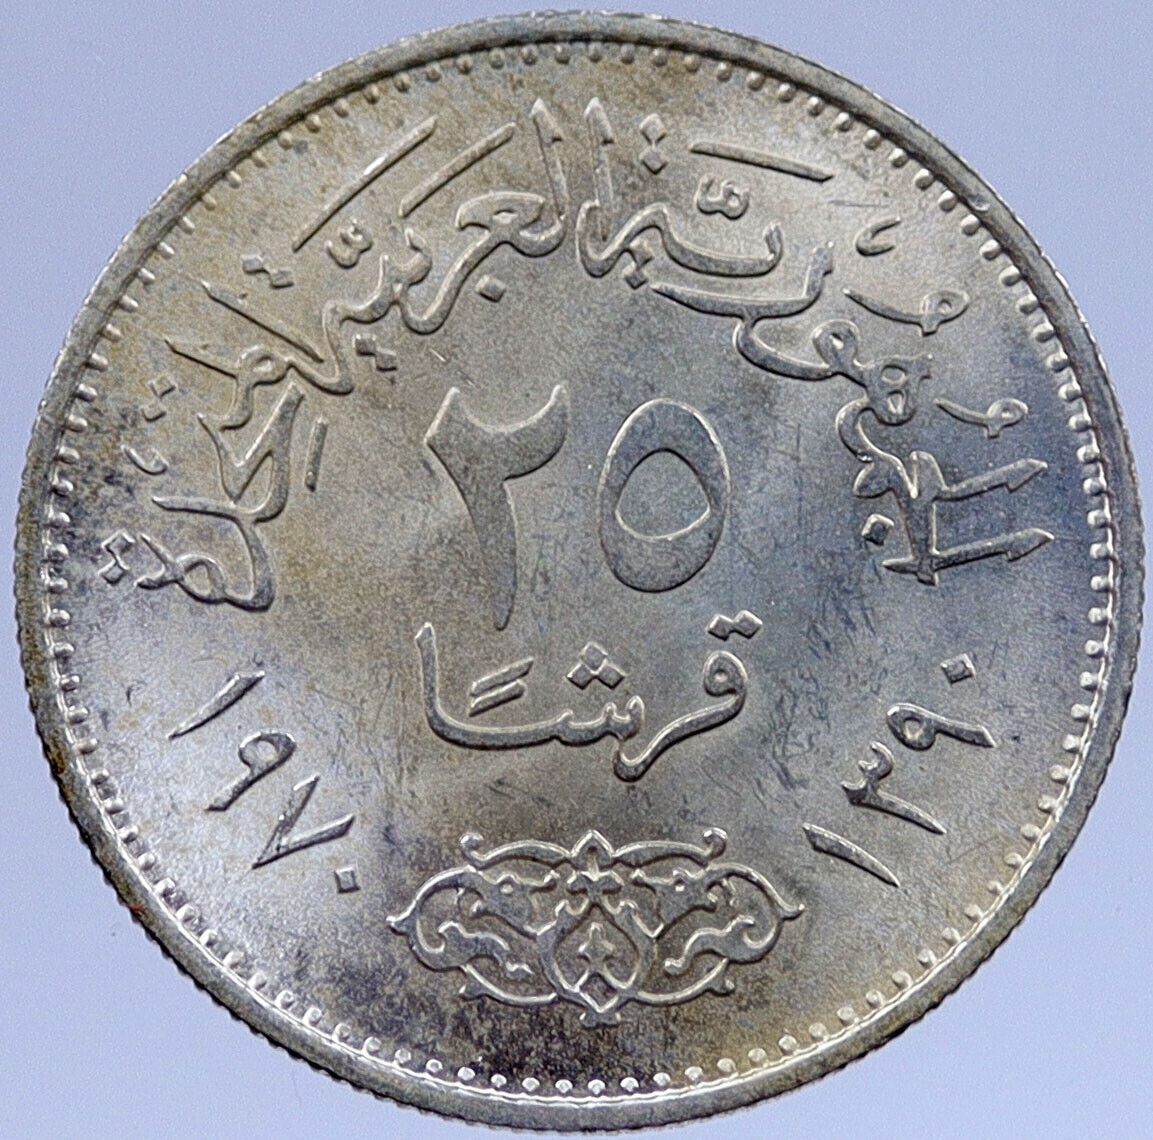 1970 EGYPT Silver 25 Piastres President Nasser Hussein VINTAGE OLD Coin i119419